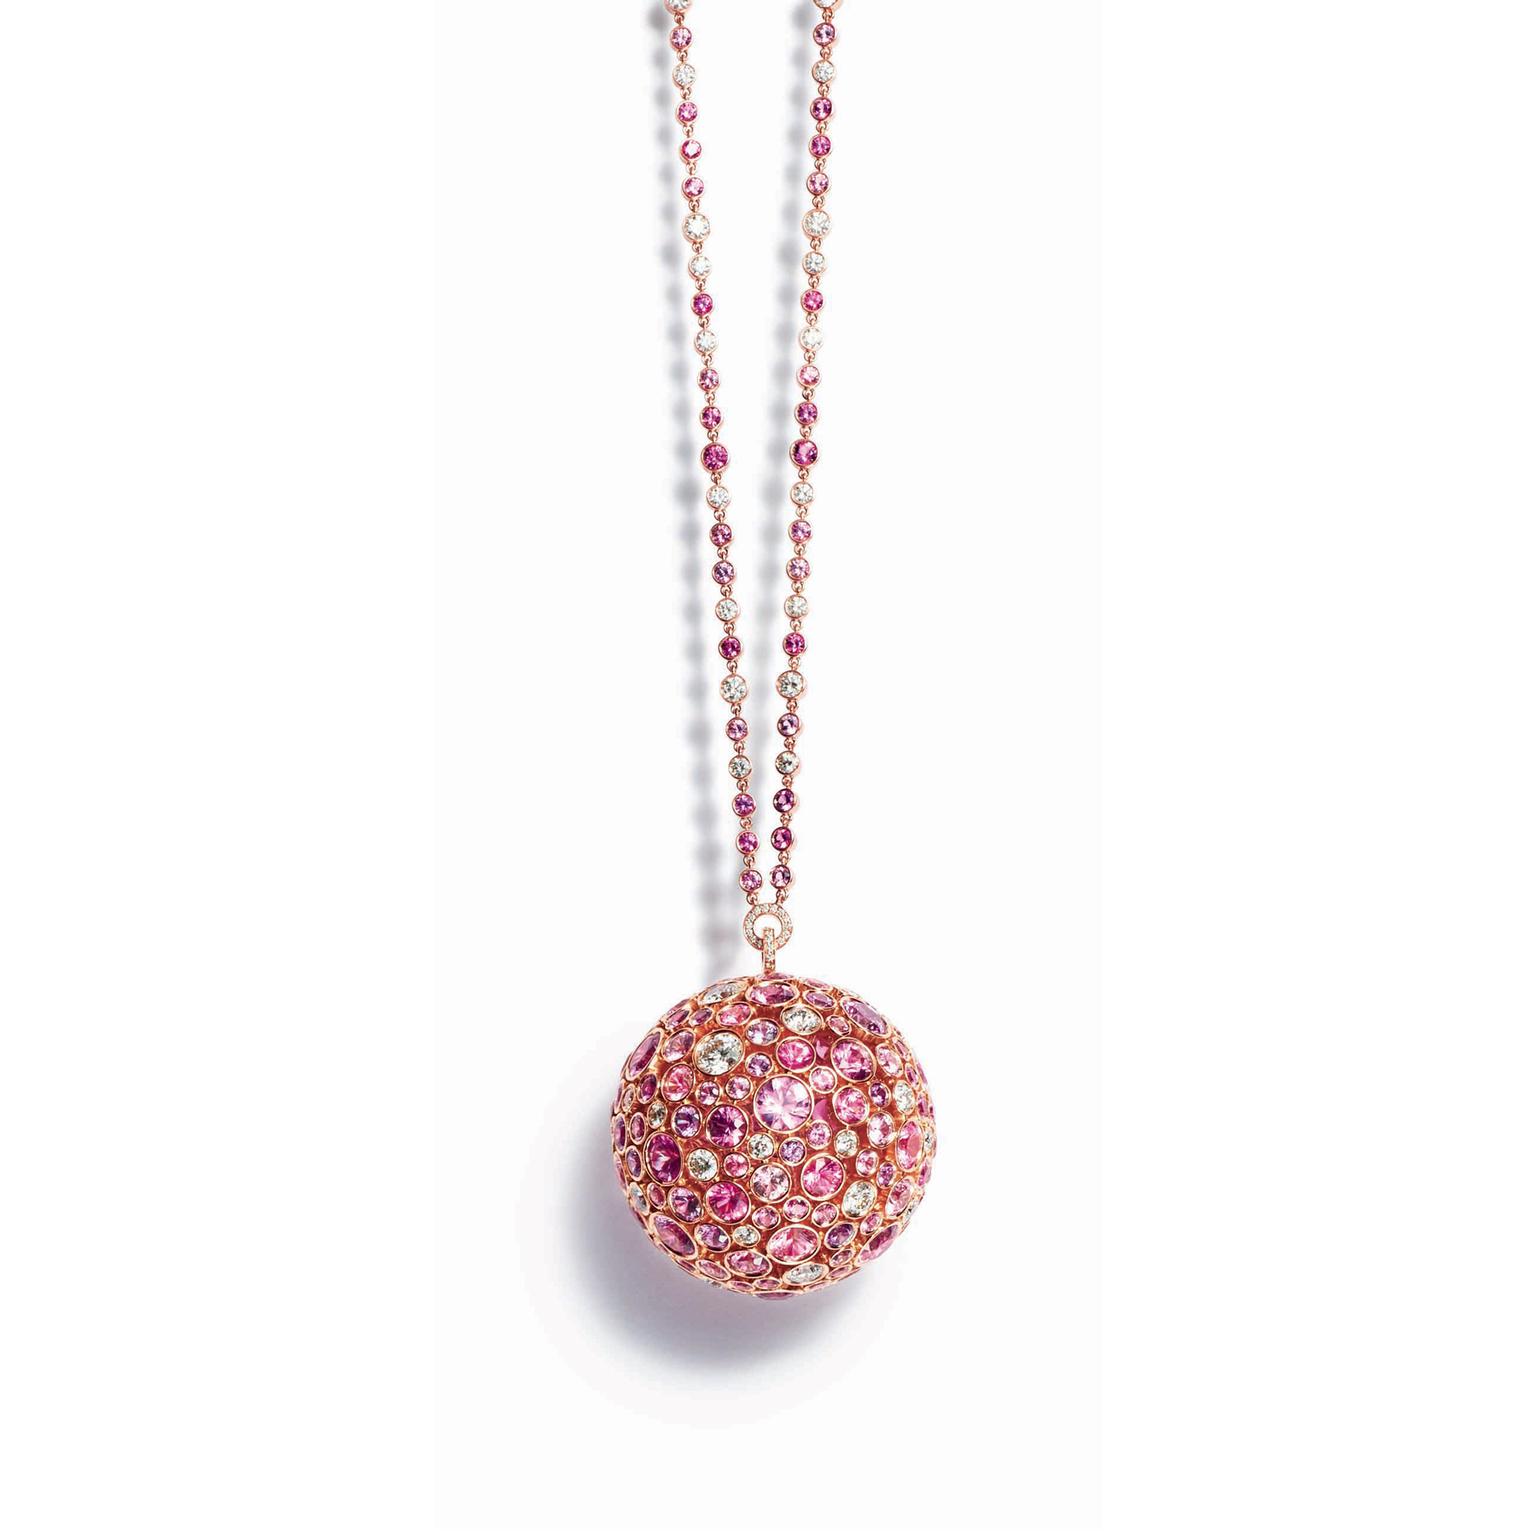 Tiffany Masterpiece Prism pink sapphire pendant